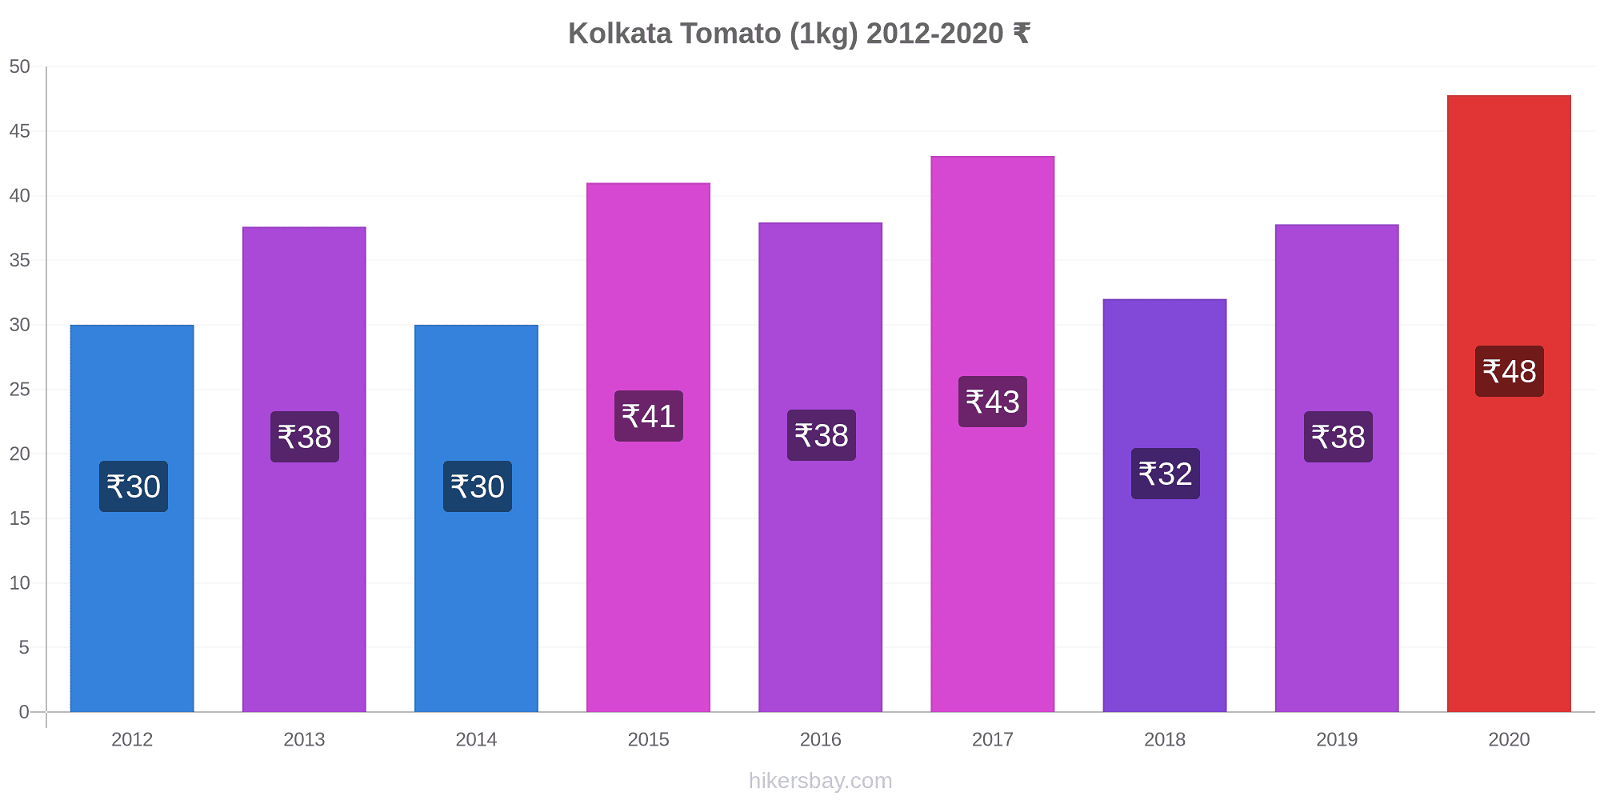 Kolkata price changes Tomato (1kg) hikersbay.com